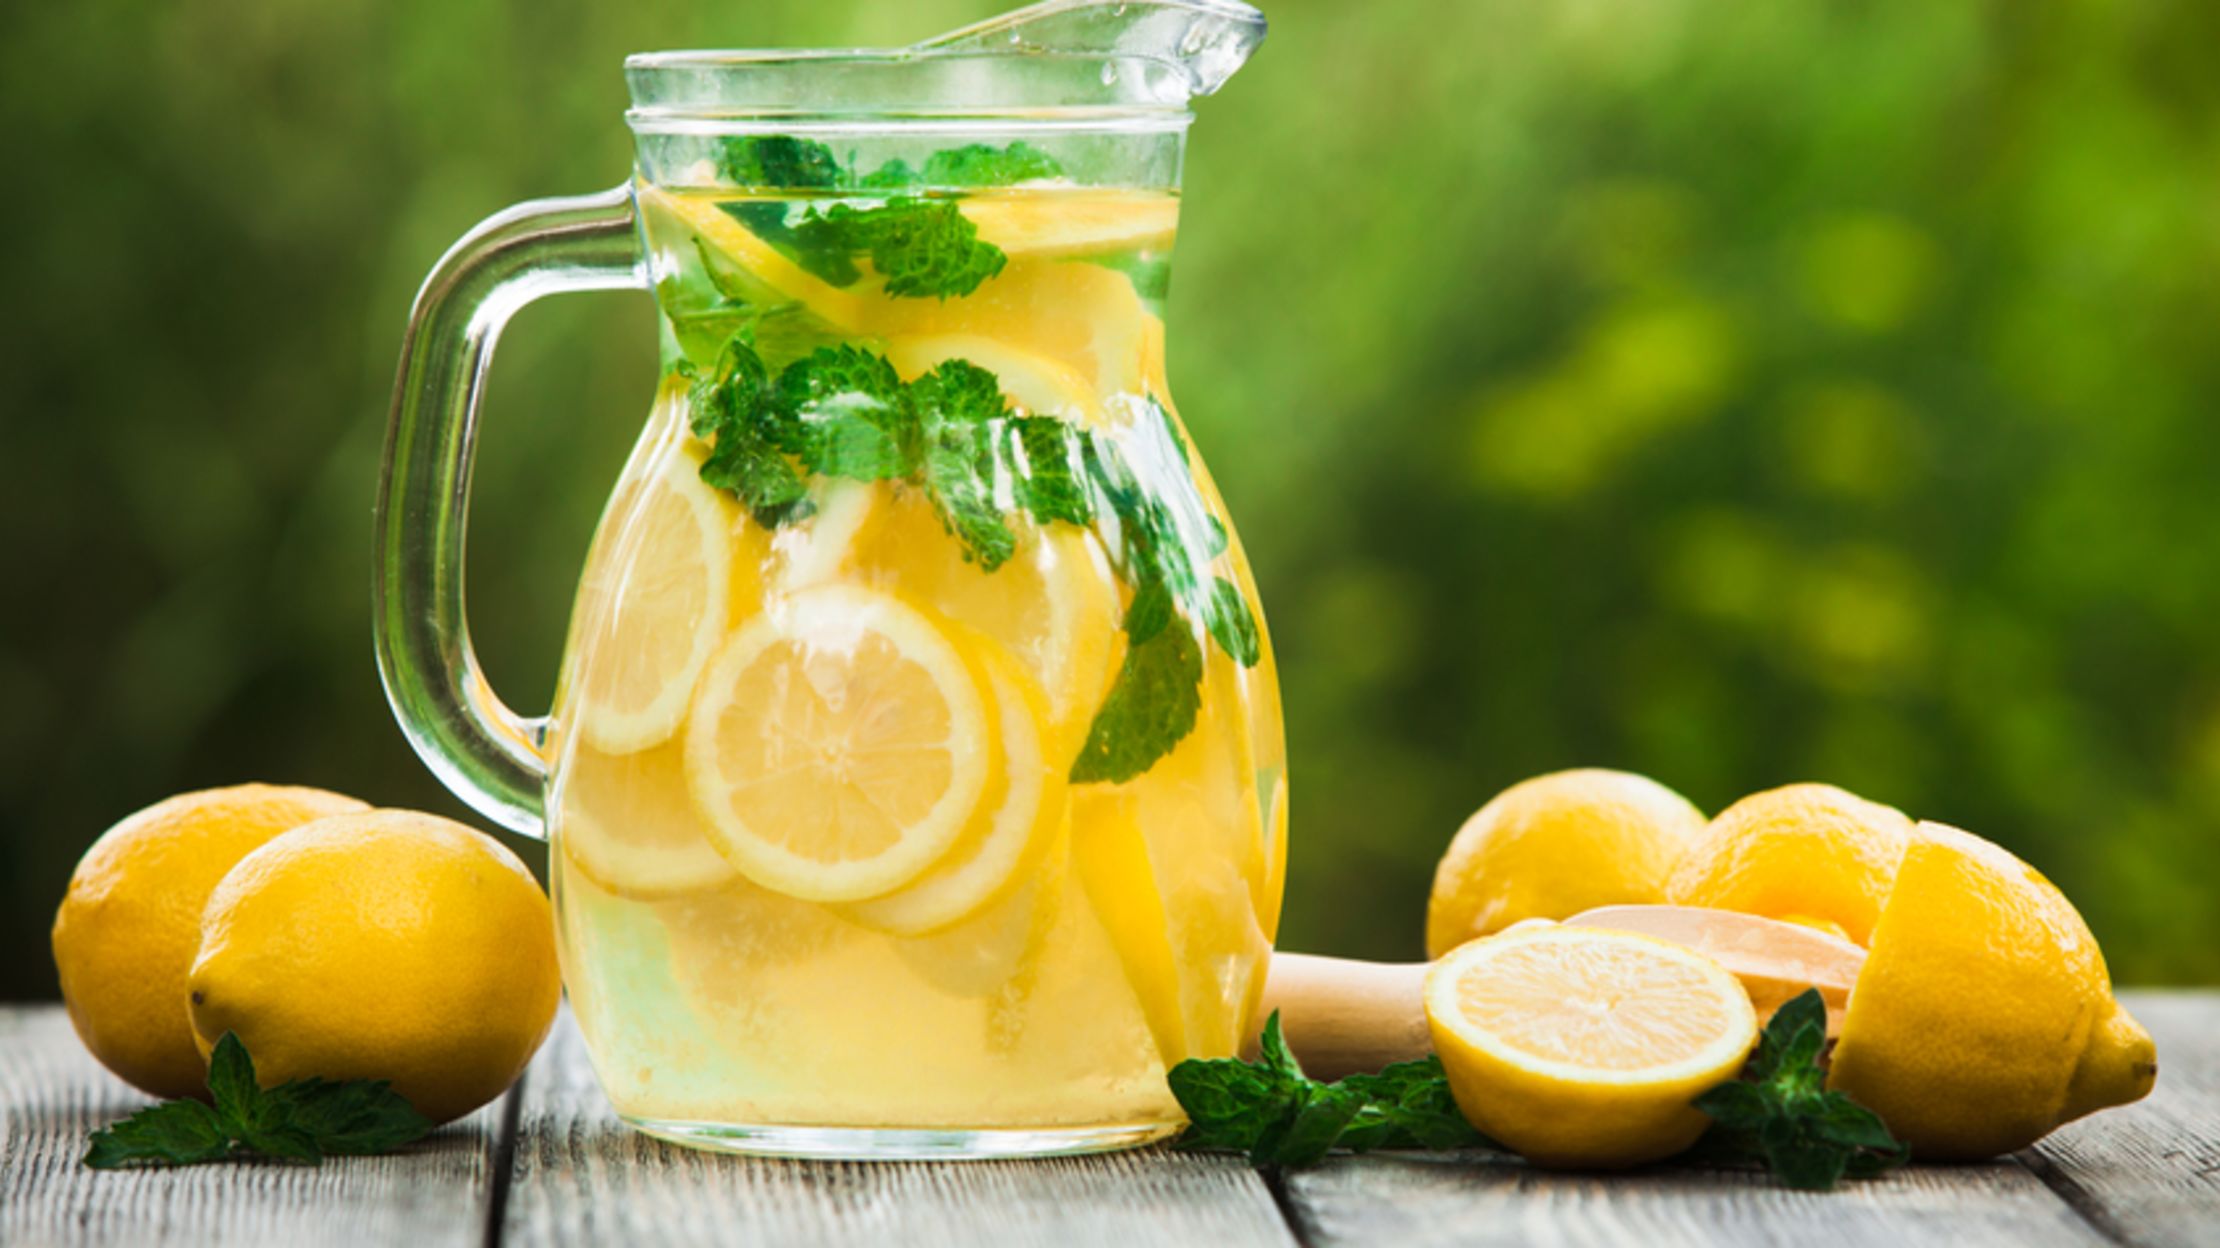 lemonade tycoon 2 new york edition tips